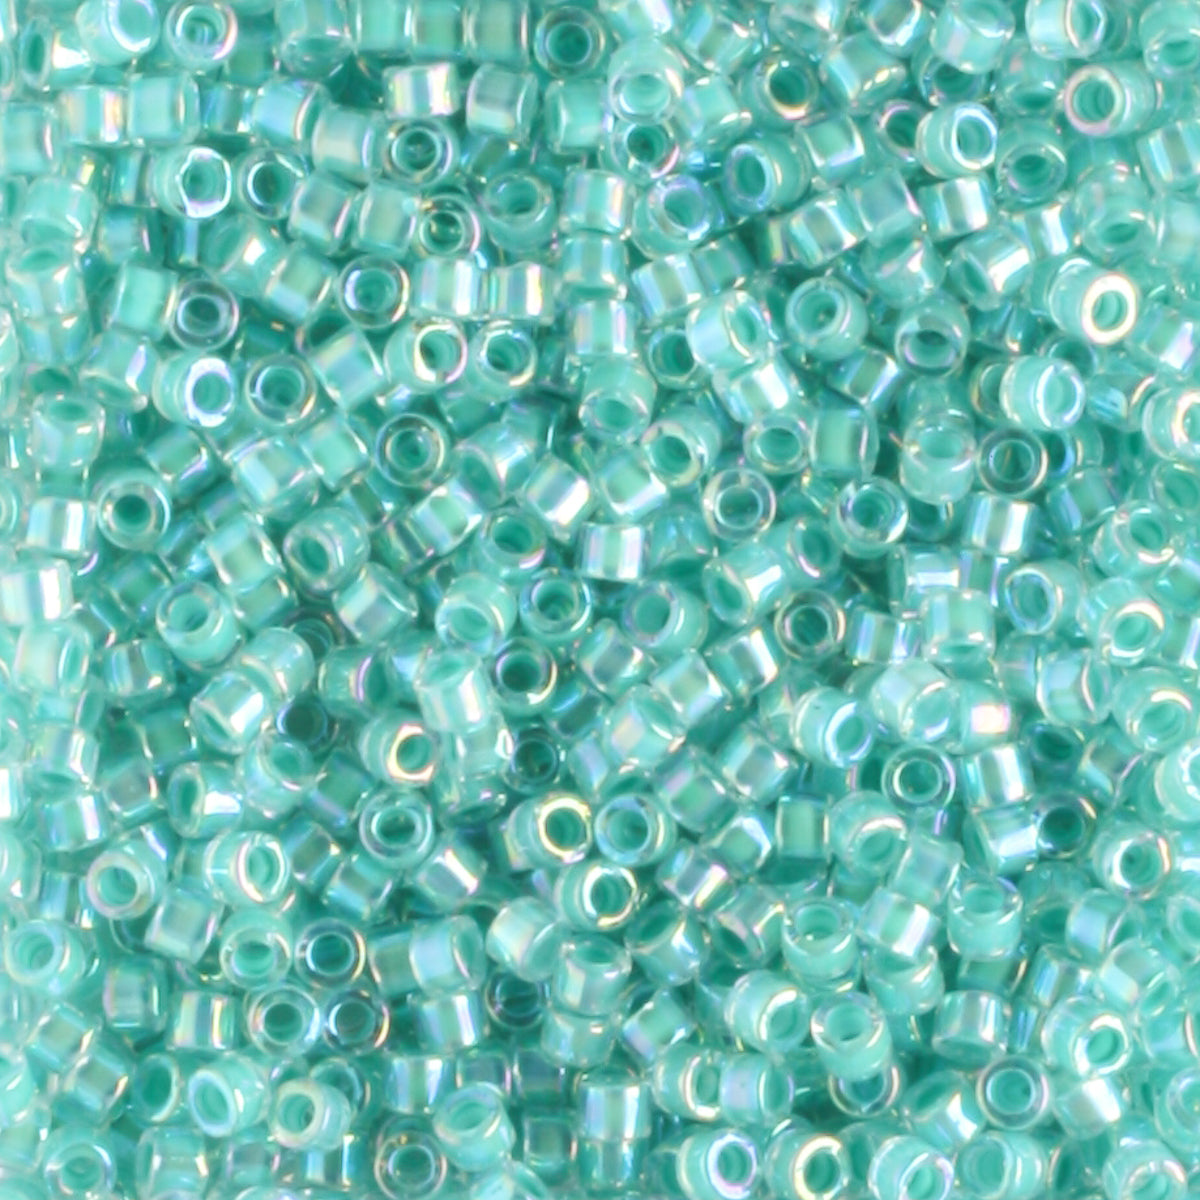 DB0079 Aqua Lined Crystal - 5 grams